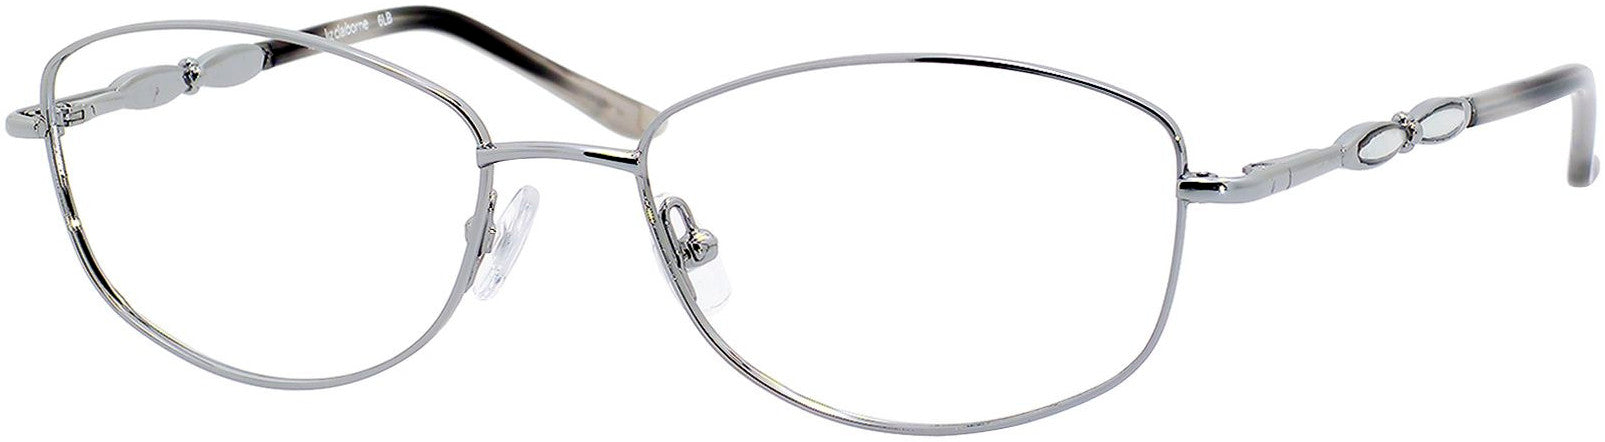  Liz Claiborne 304 Oval Modified Eyeglasses 06LB-06LB  Ruthenium (00 Demo Lens)